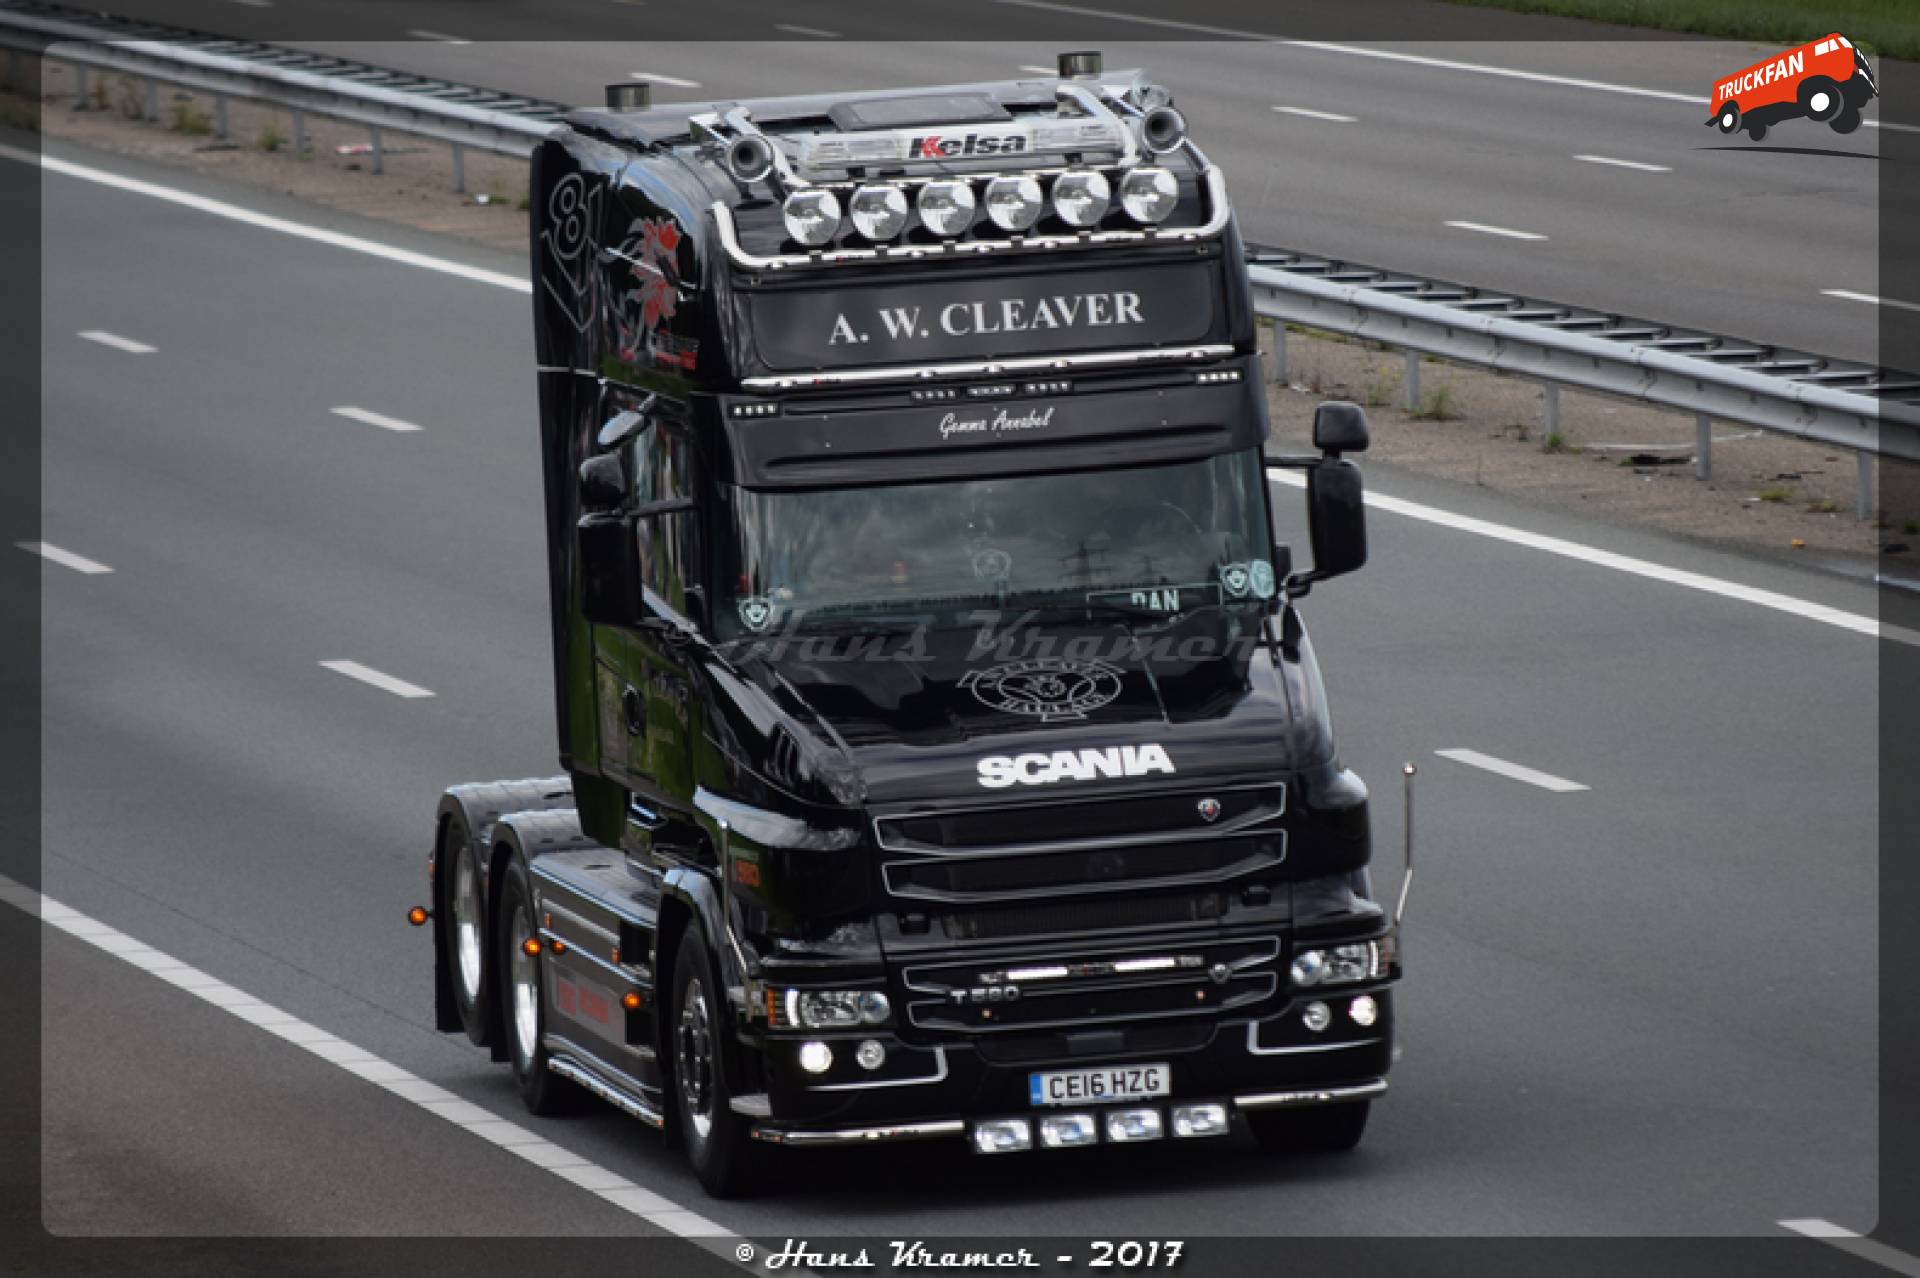 Scania T580